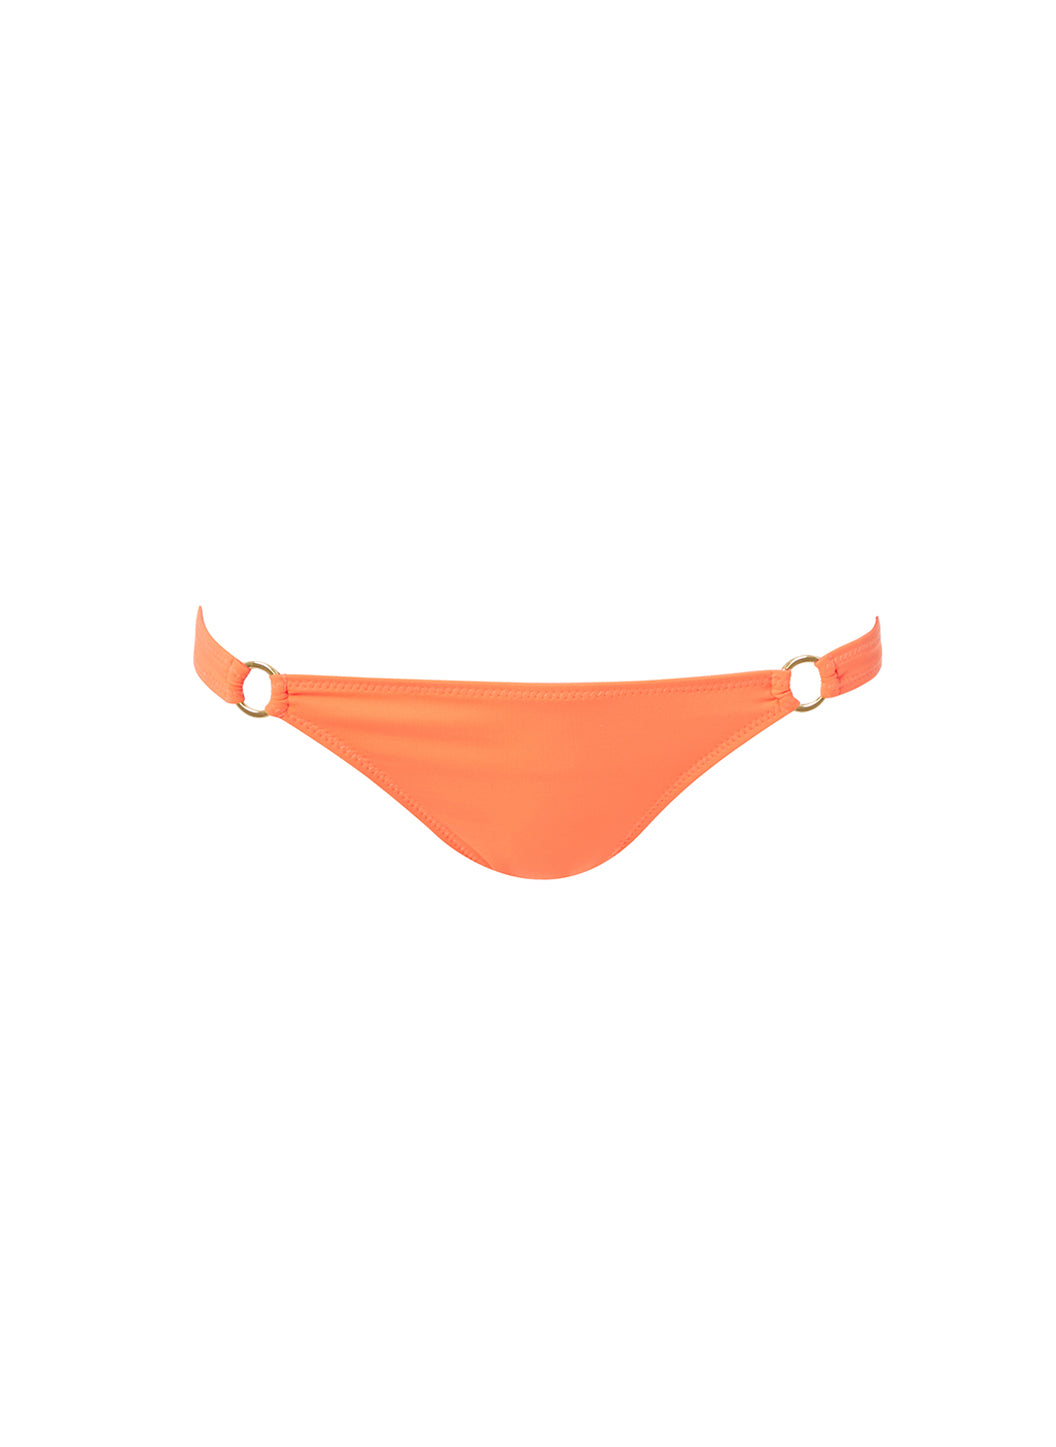 caracas-orange-bikini-bottom_cutout